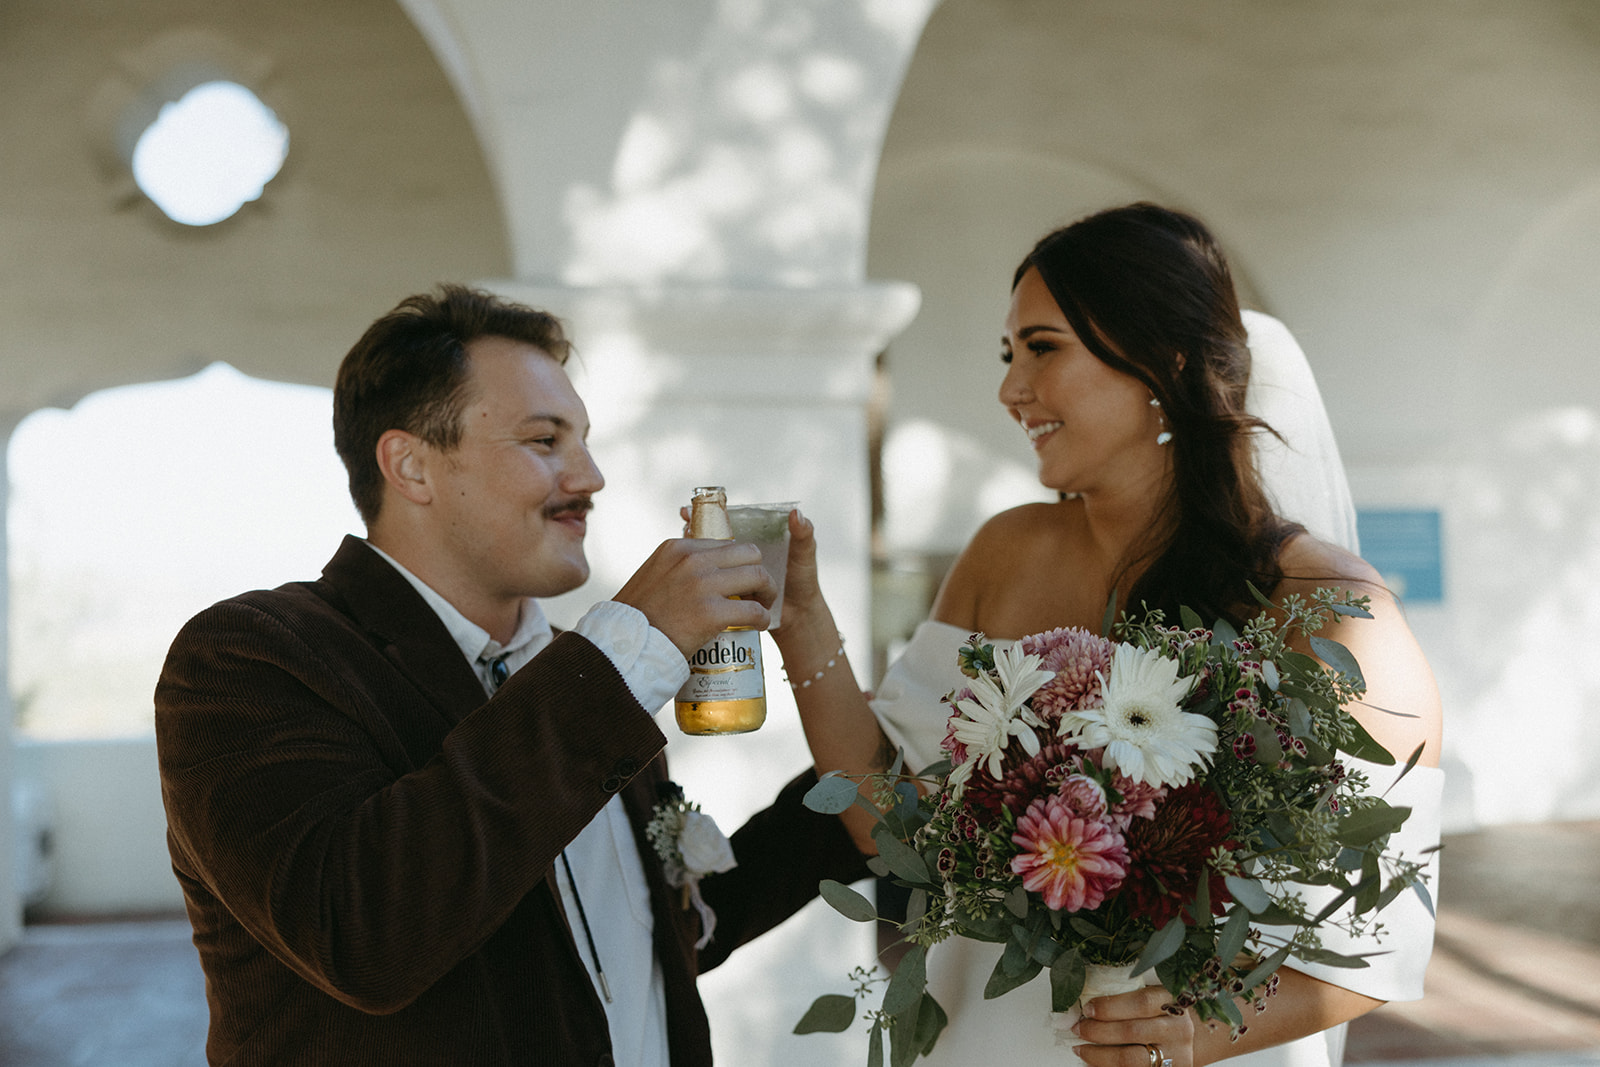 Bride and groom toasting drinks